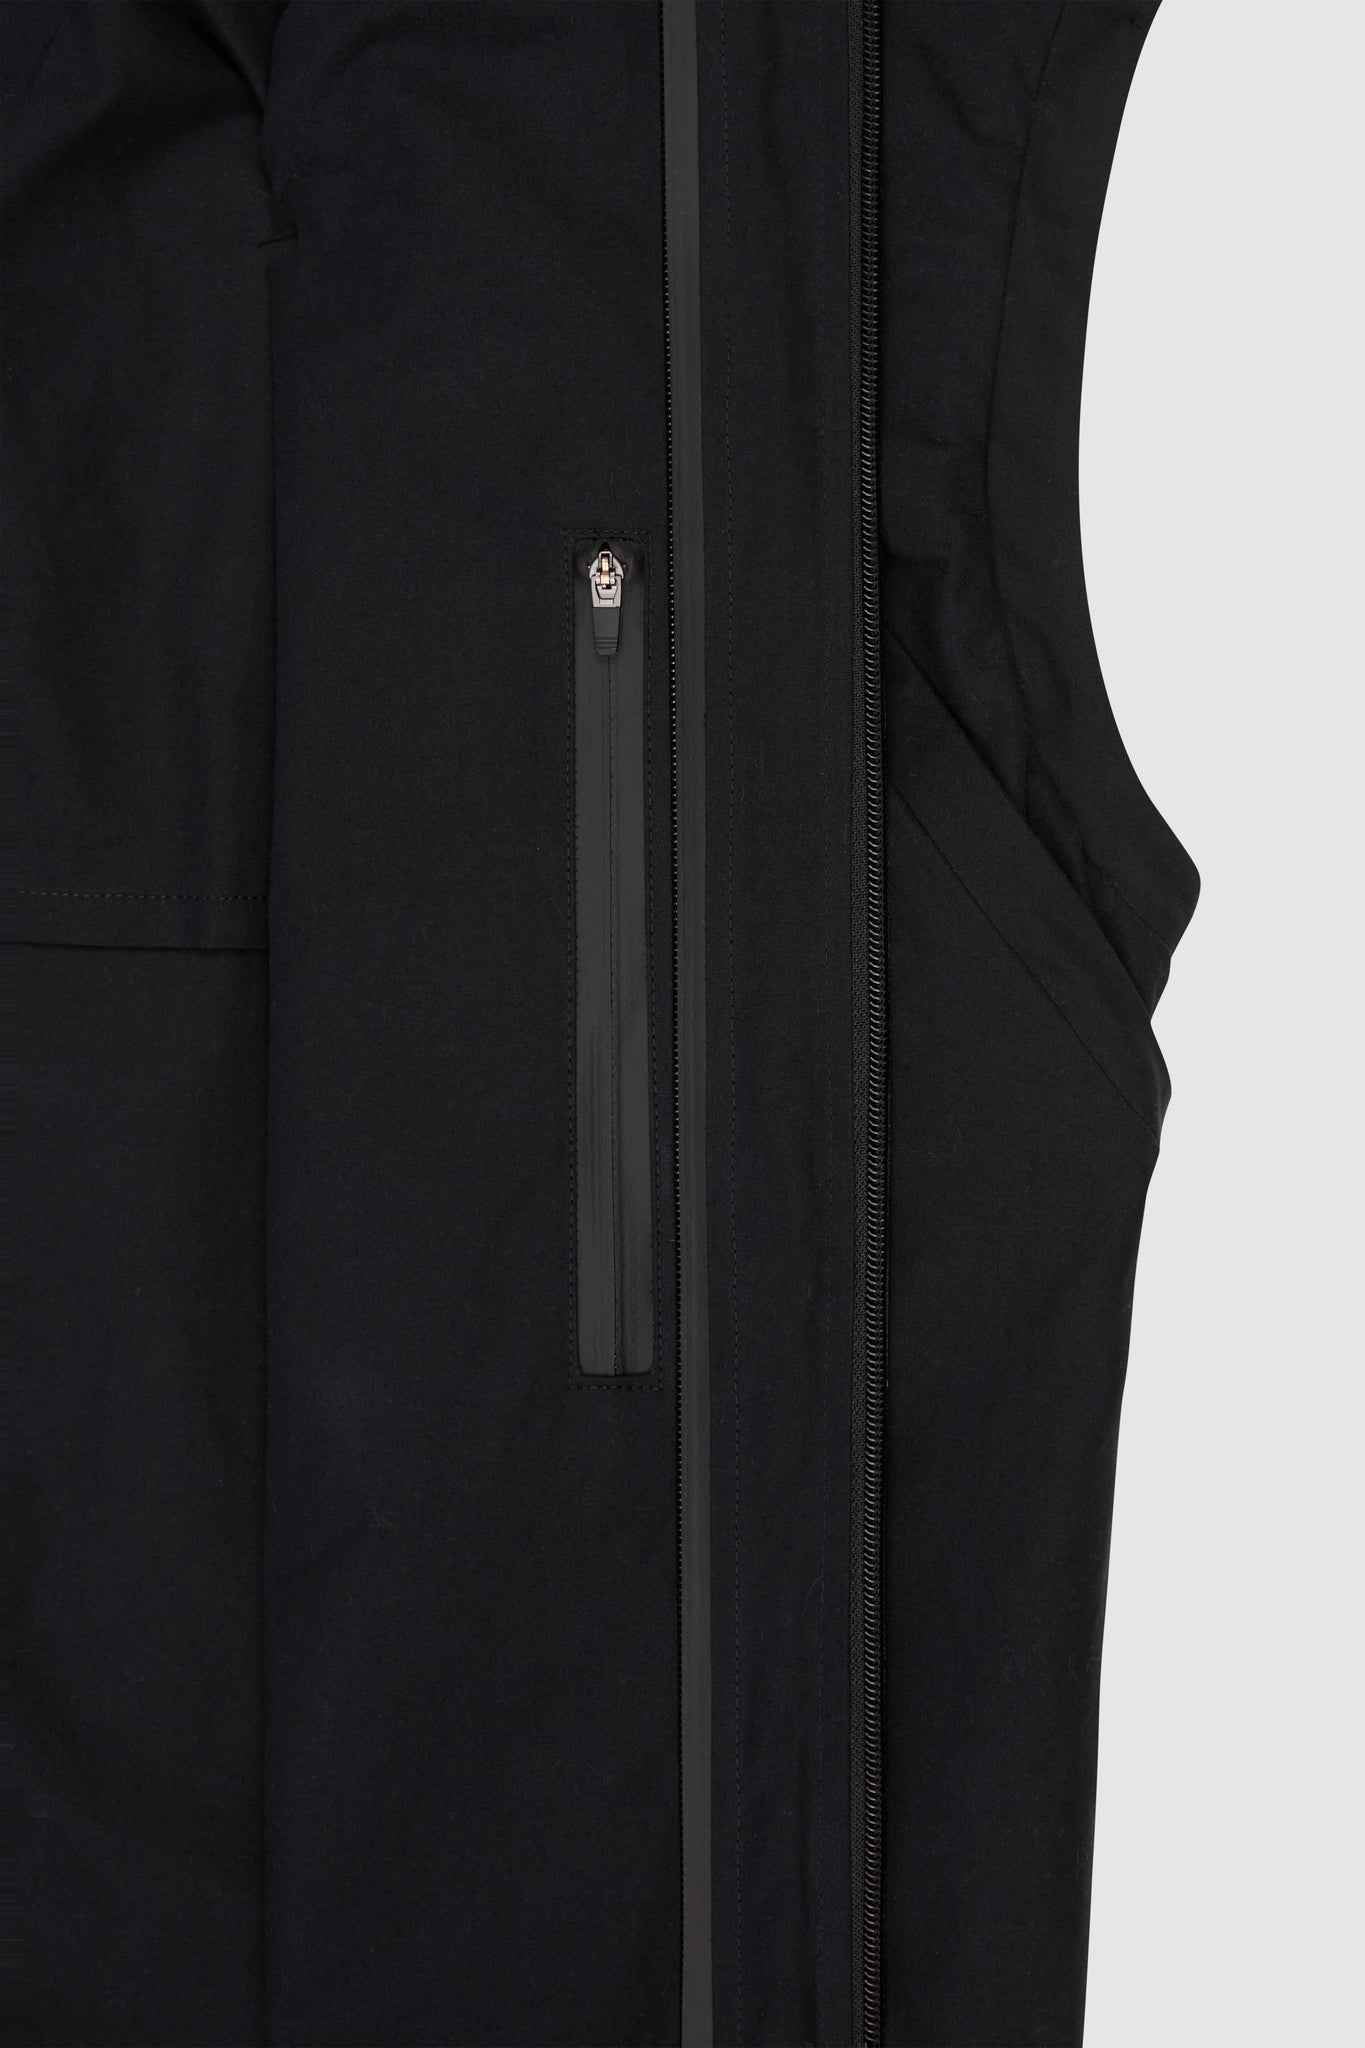 Black Outerwear Jacket made from 100% Organic Cotton Zipper Detail Inner Facing